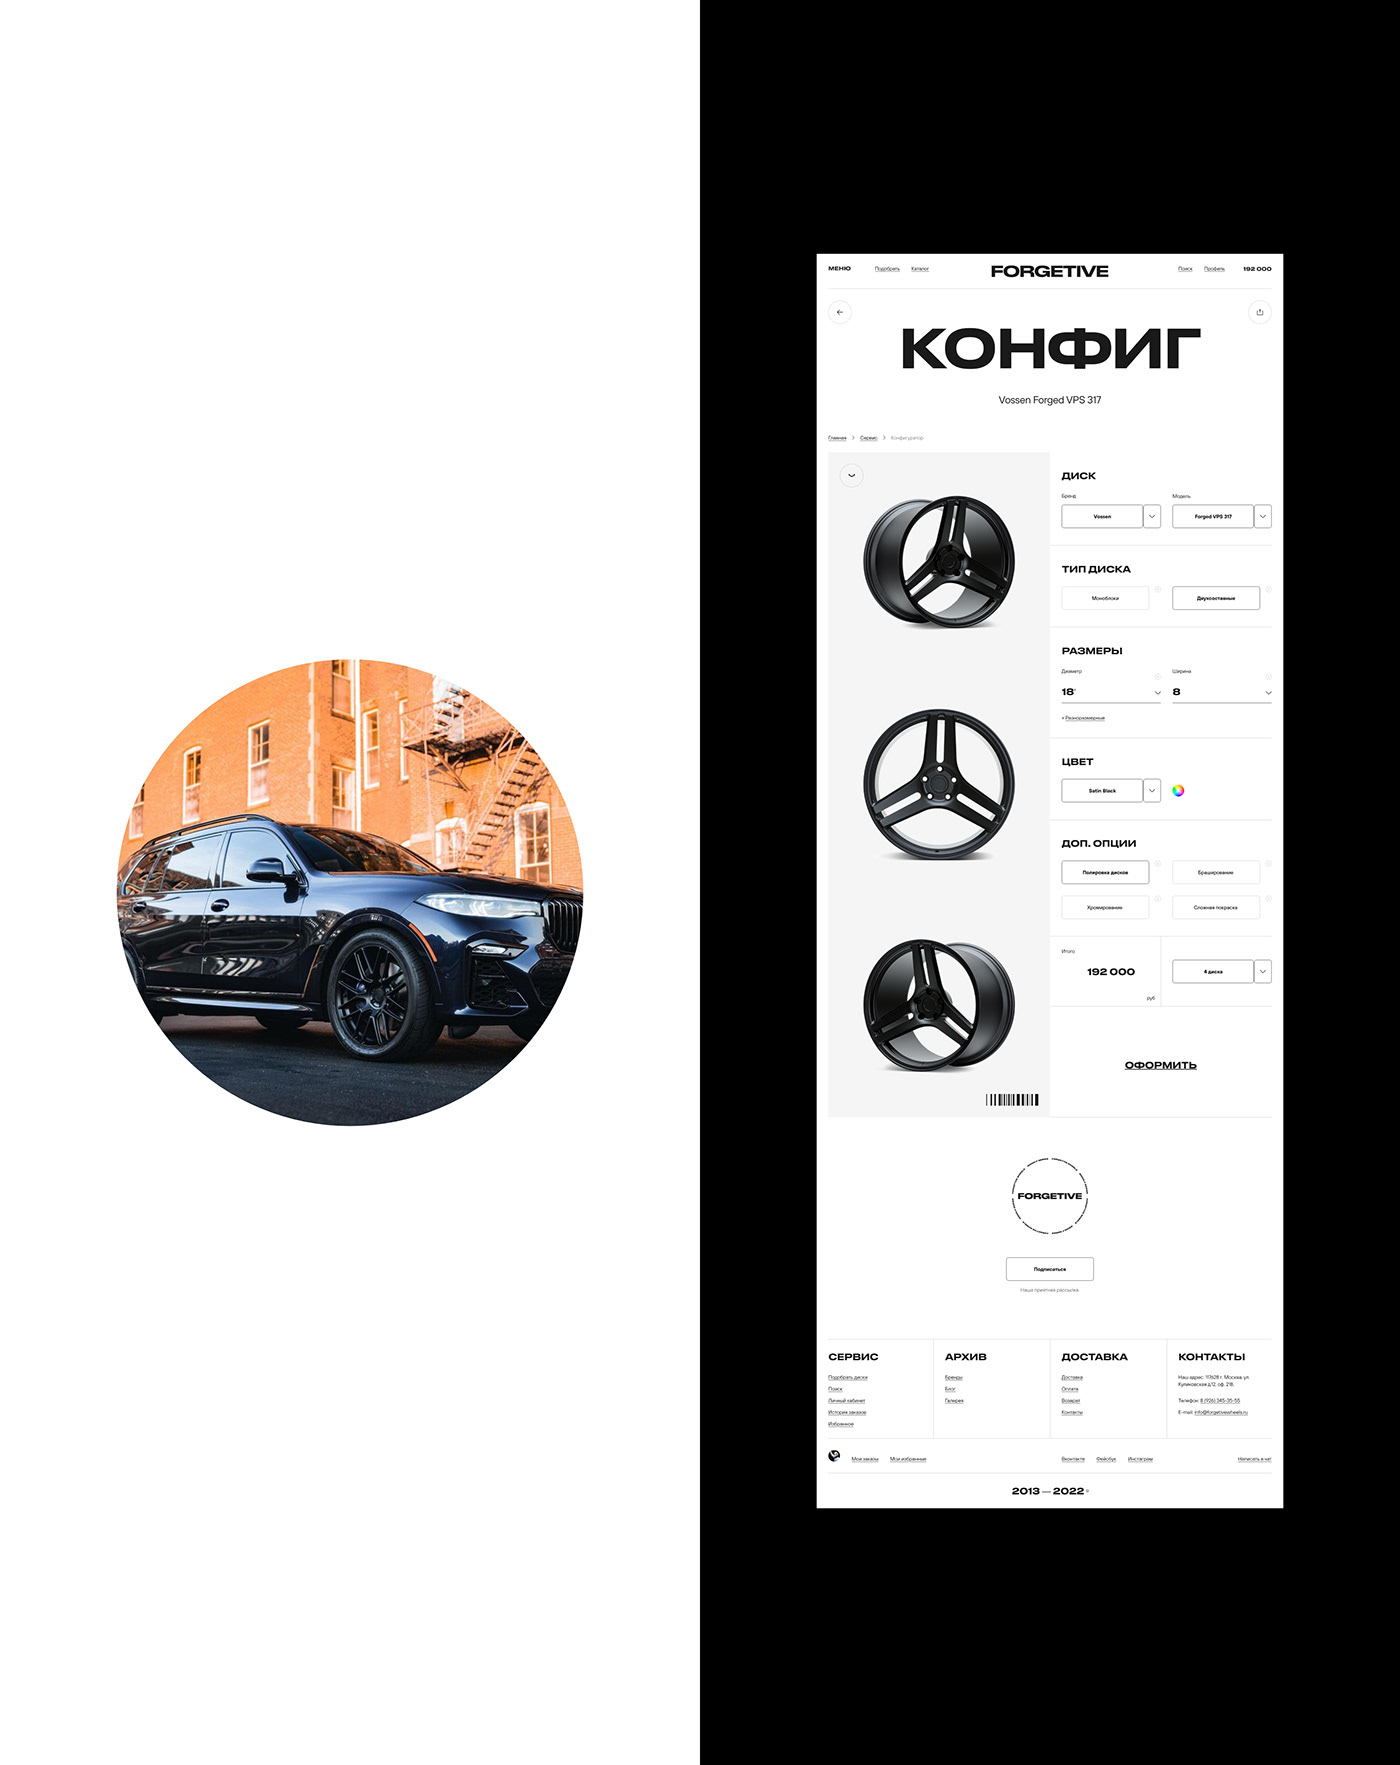 vossen wheels Auto car Ecommerce fps 317 Kostin shop store Website